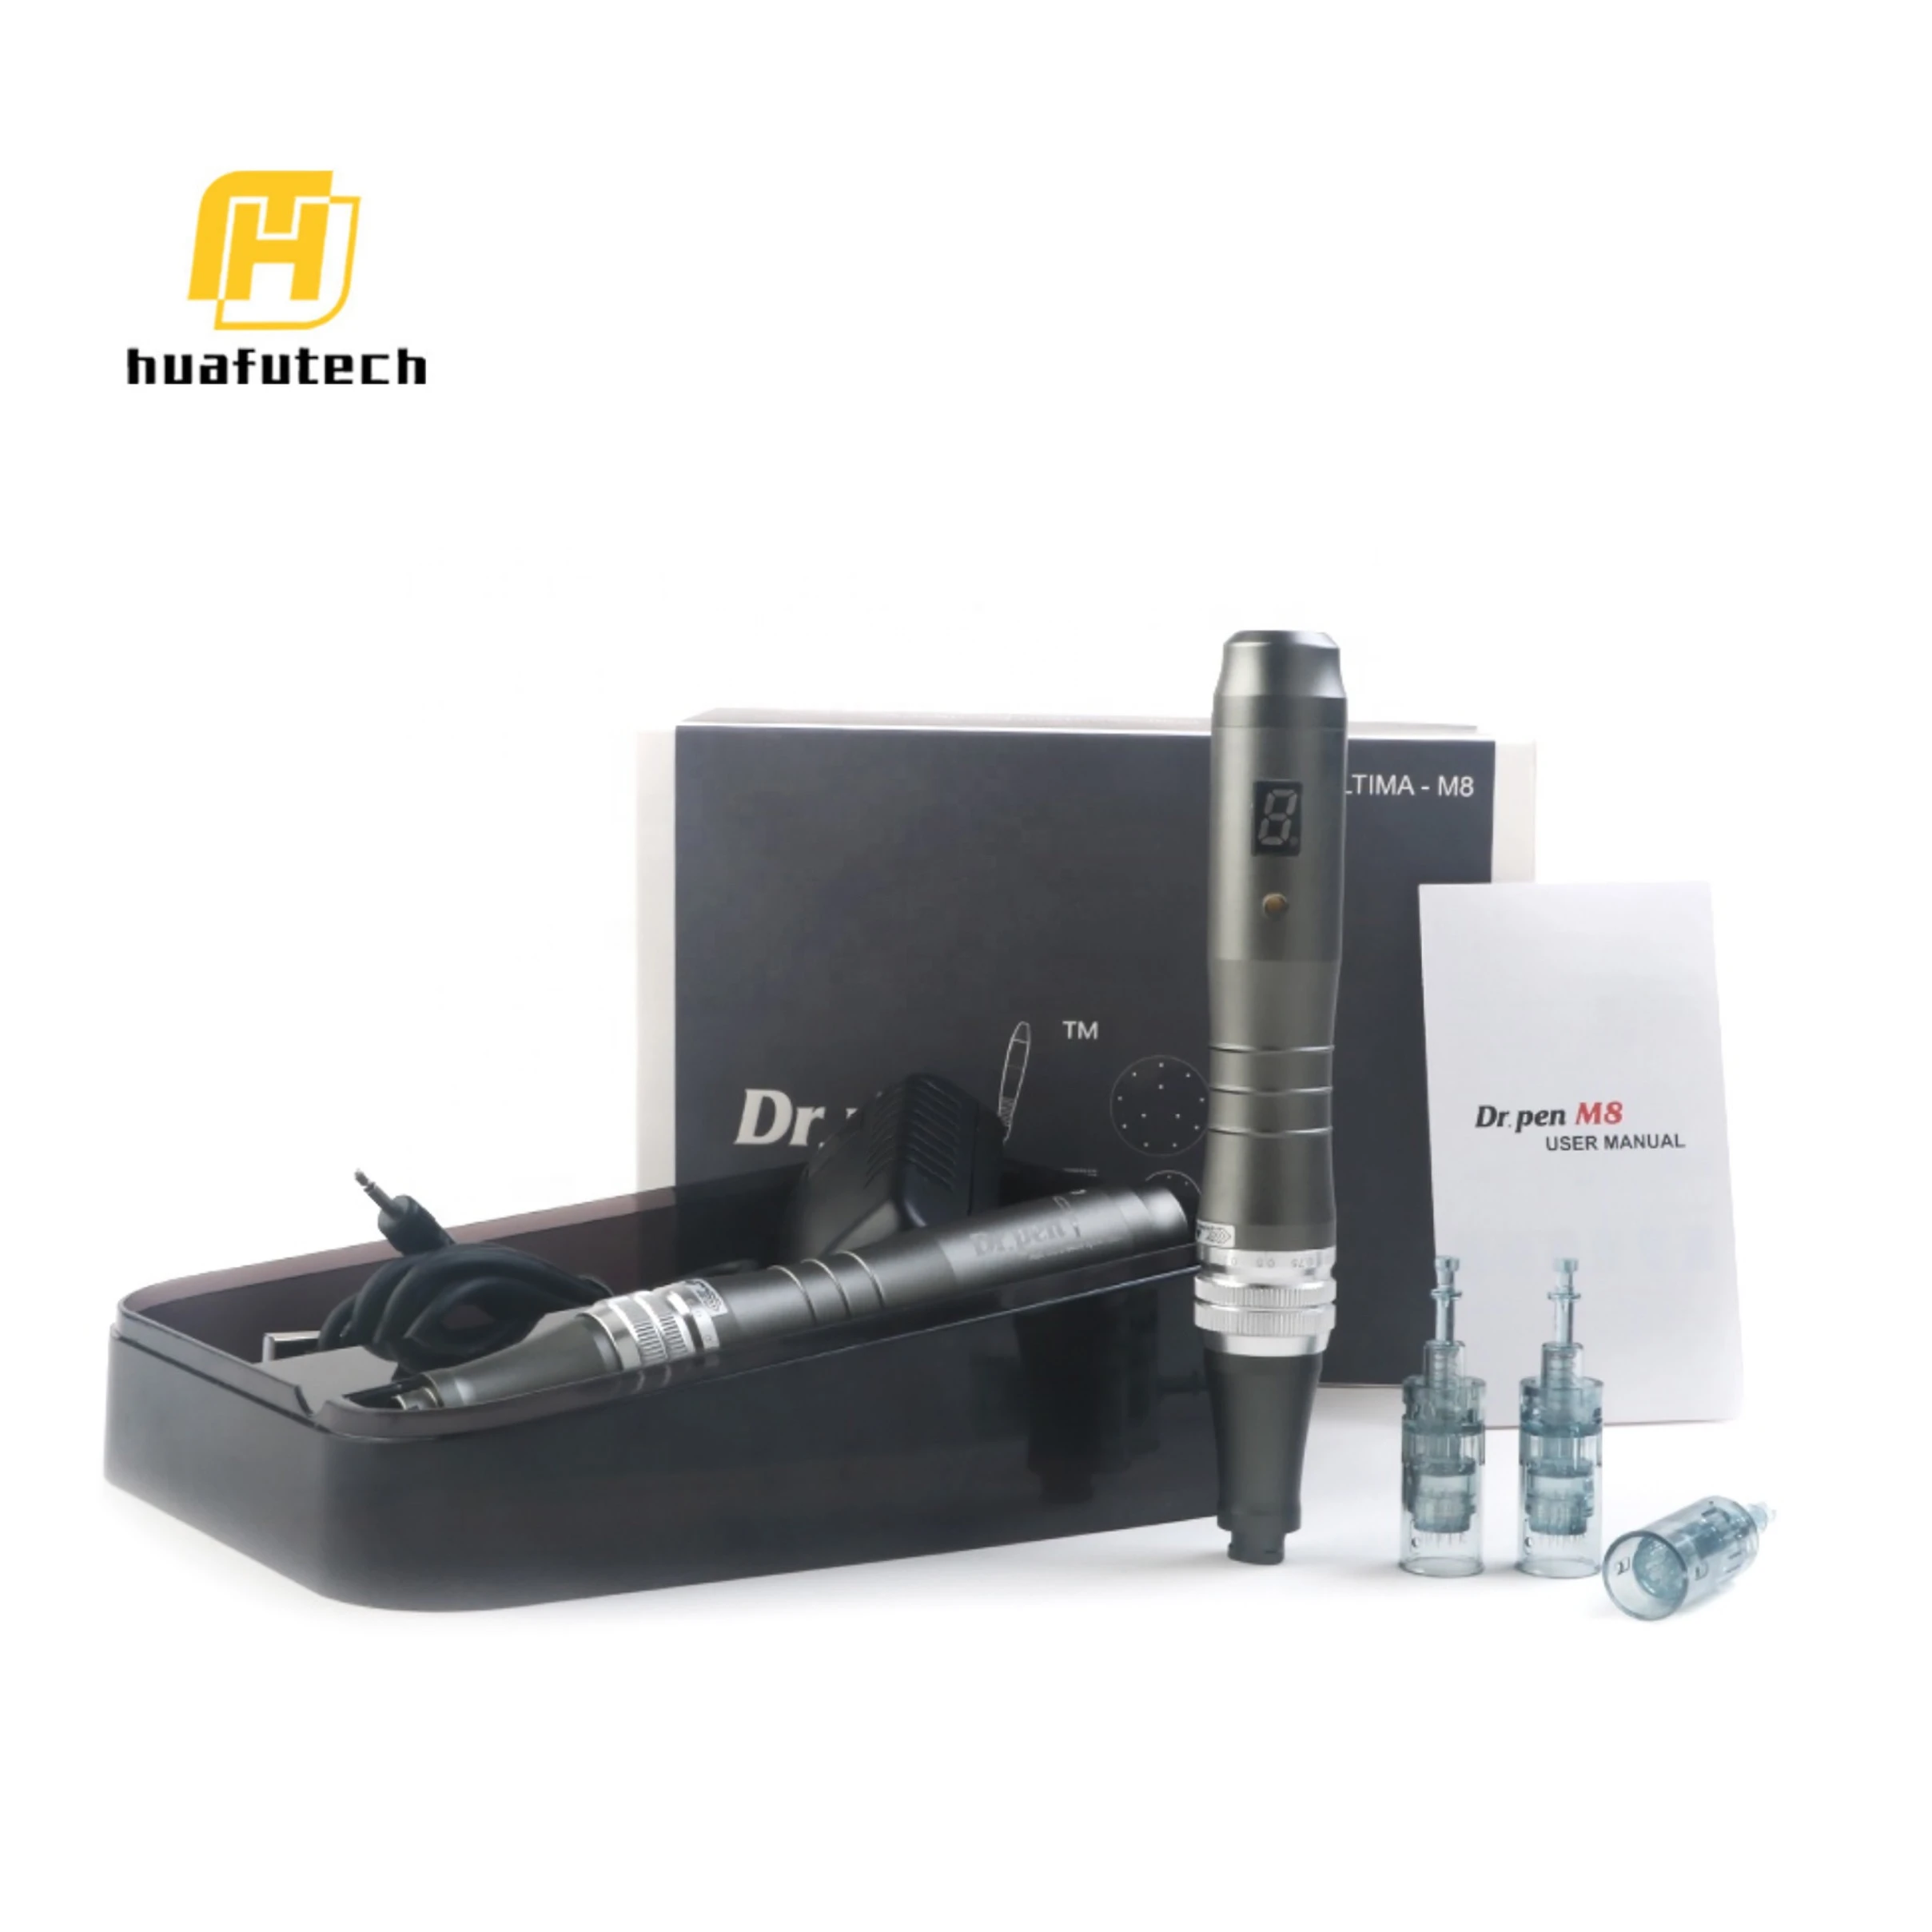 Huafu Digital 6 levels Electric Derma Pen Dr Pen M8 Auto Microneedle System